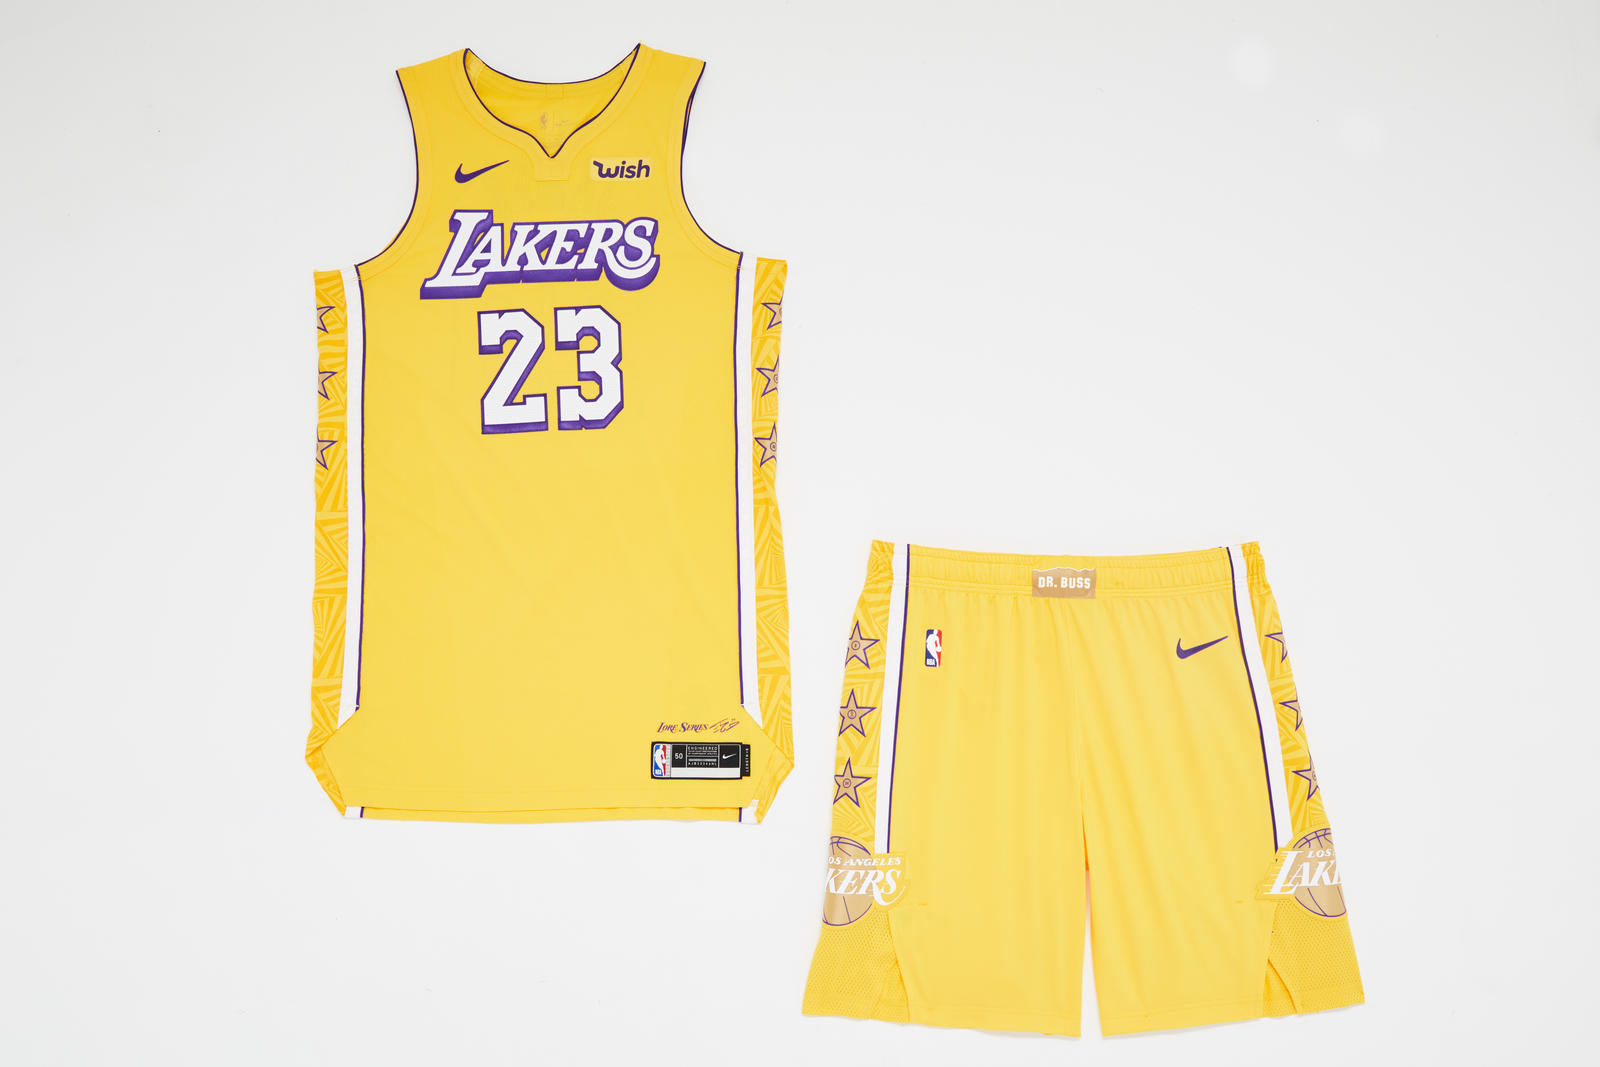 Mackubex - 2019-2020 NBA Nike City Edition Uniforms by Pep